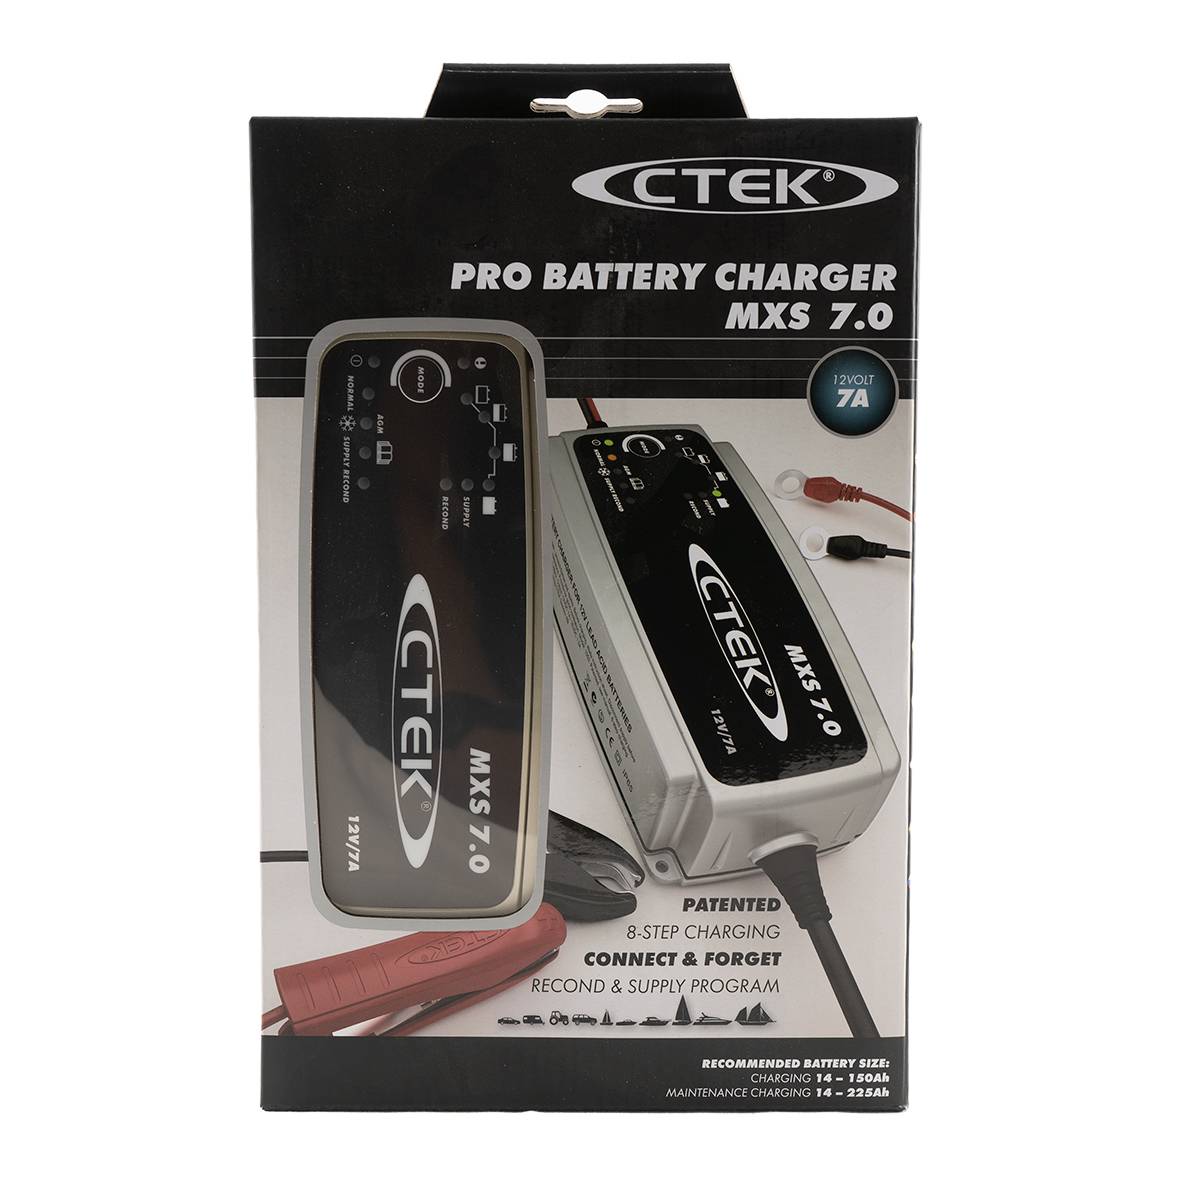 CTEK MXS 7.0 Batterie Ladegerät 12V 7A für Bleiakkus, Ladegeräte, Boot, Batterien für